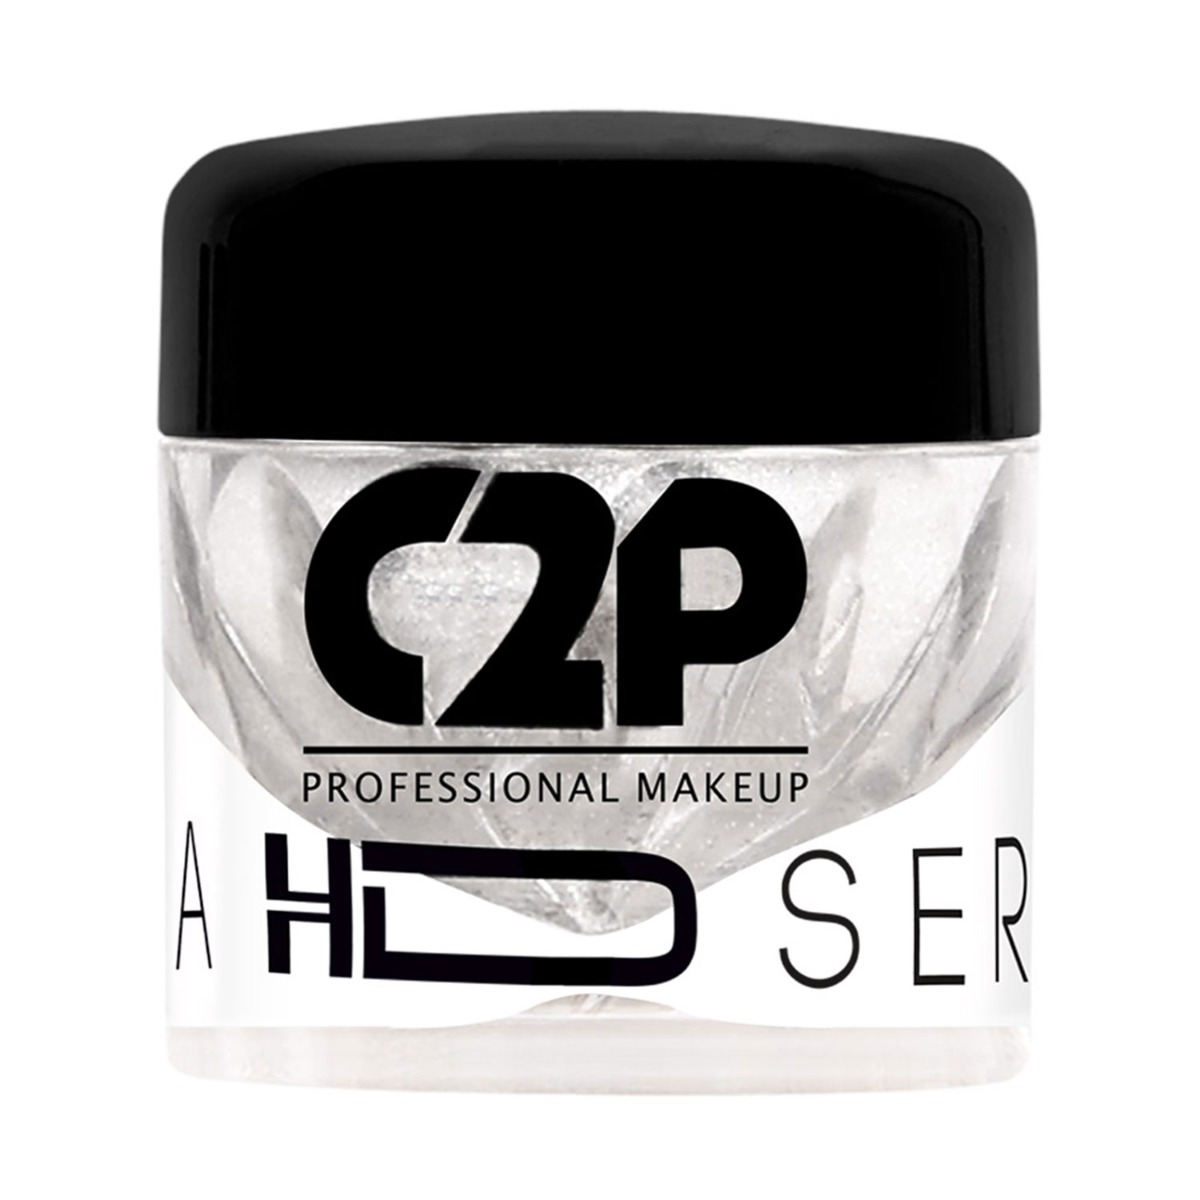 C2P Pro HD Loose Precious Pigments - Due Silver 152, 2gm